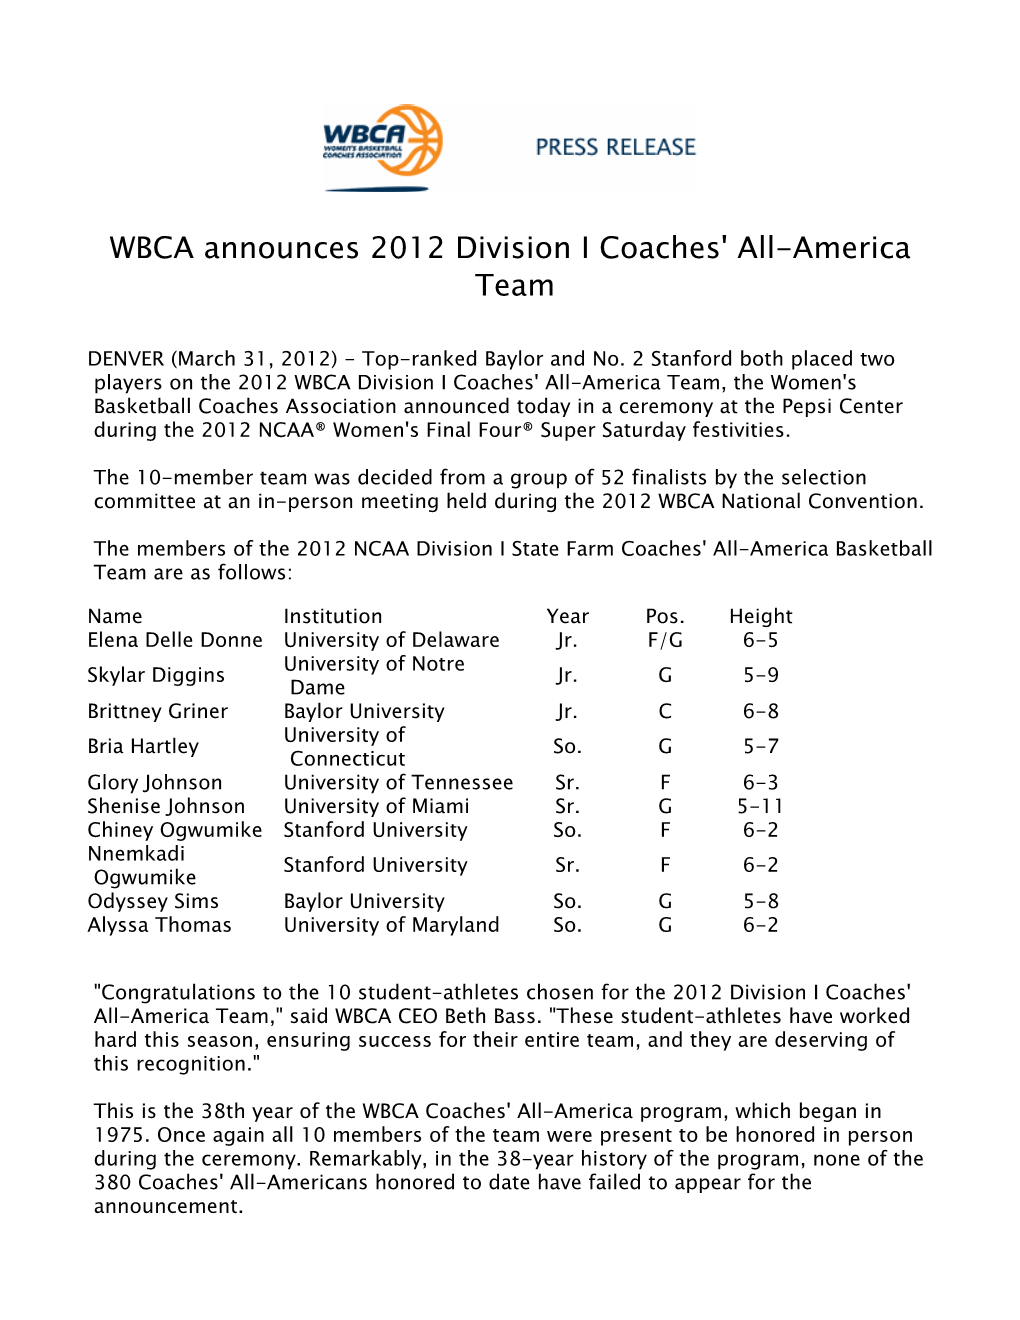 WBCA Announces 2012 Division I Coaches' All-America Team 2011-12 033112